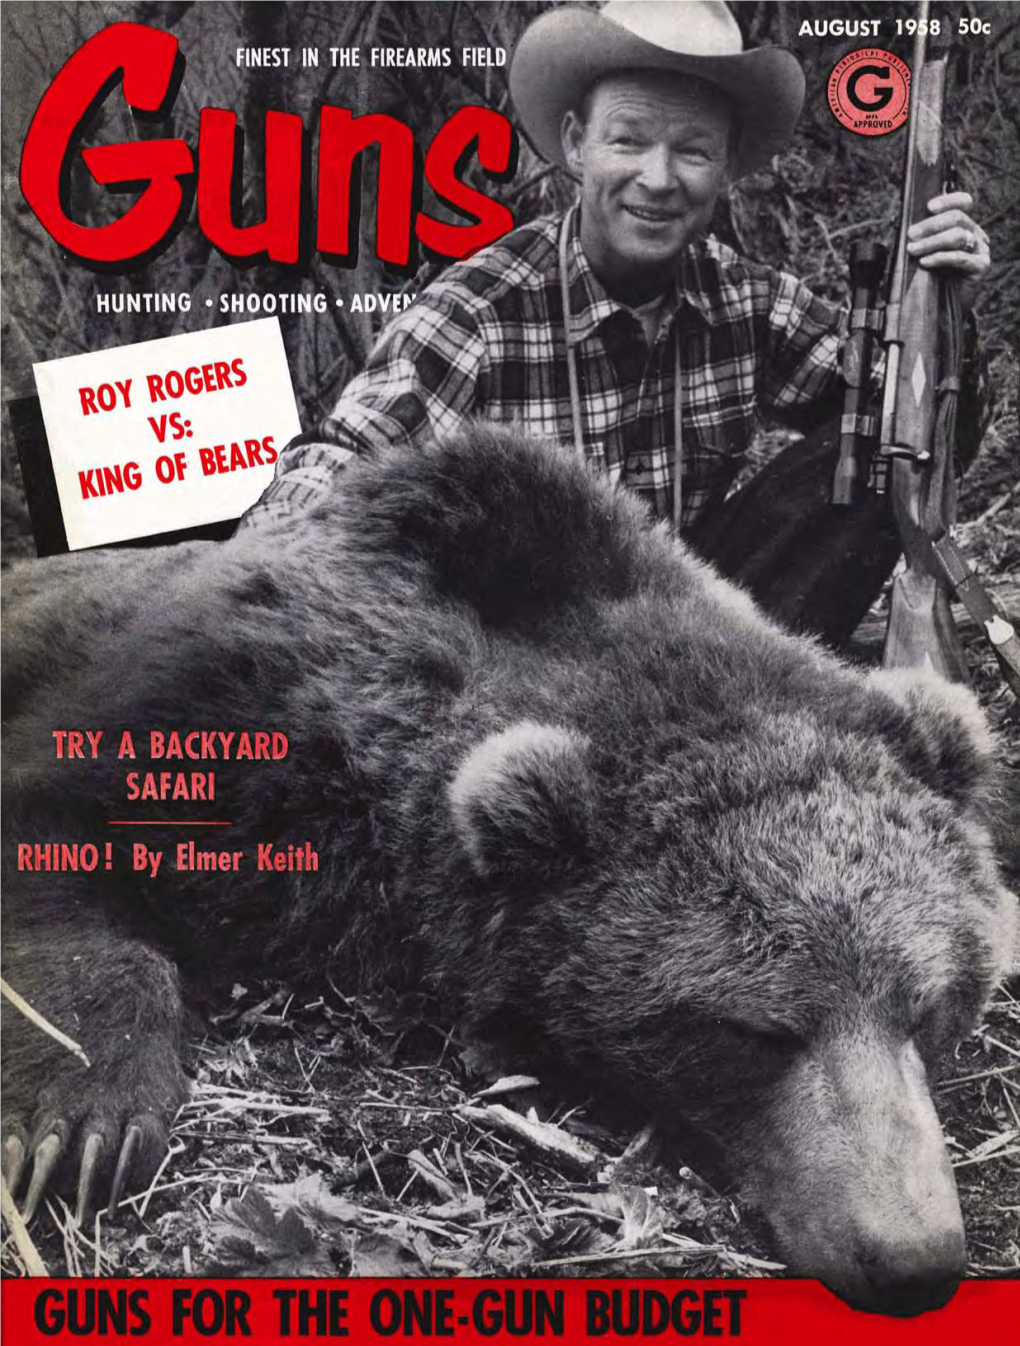 GUNS Magazine August 1958